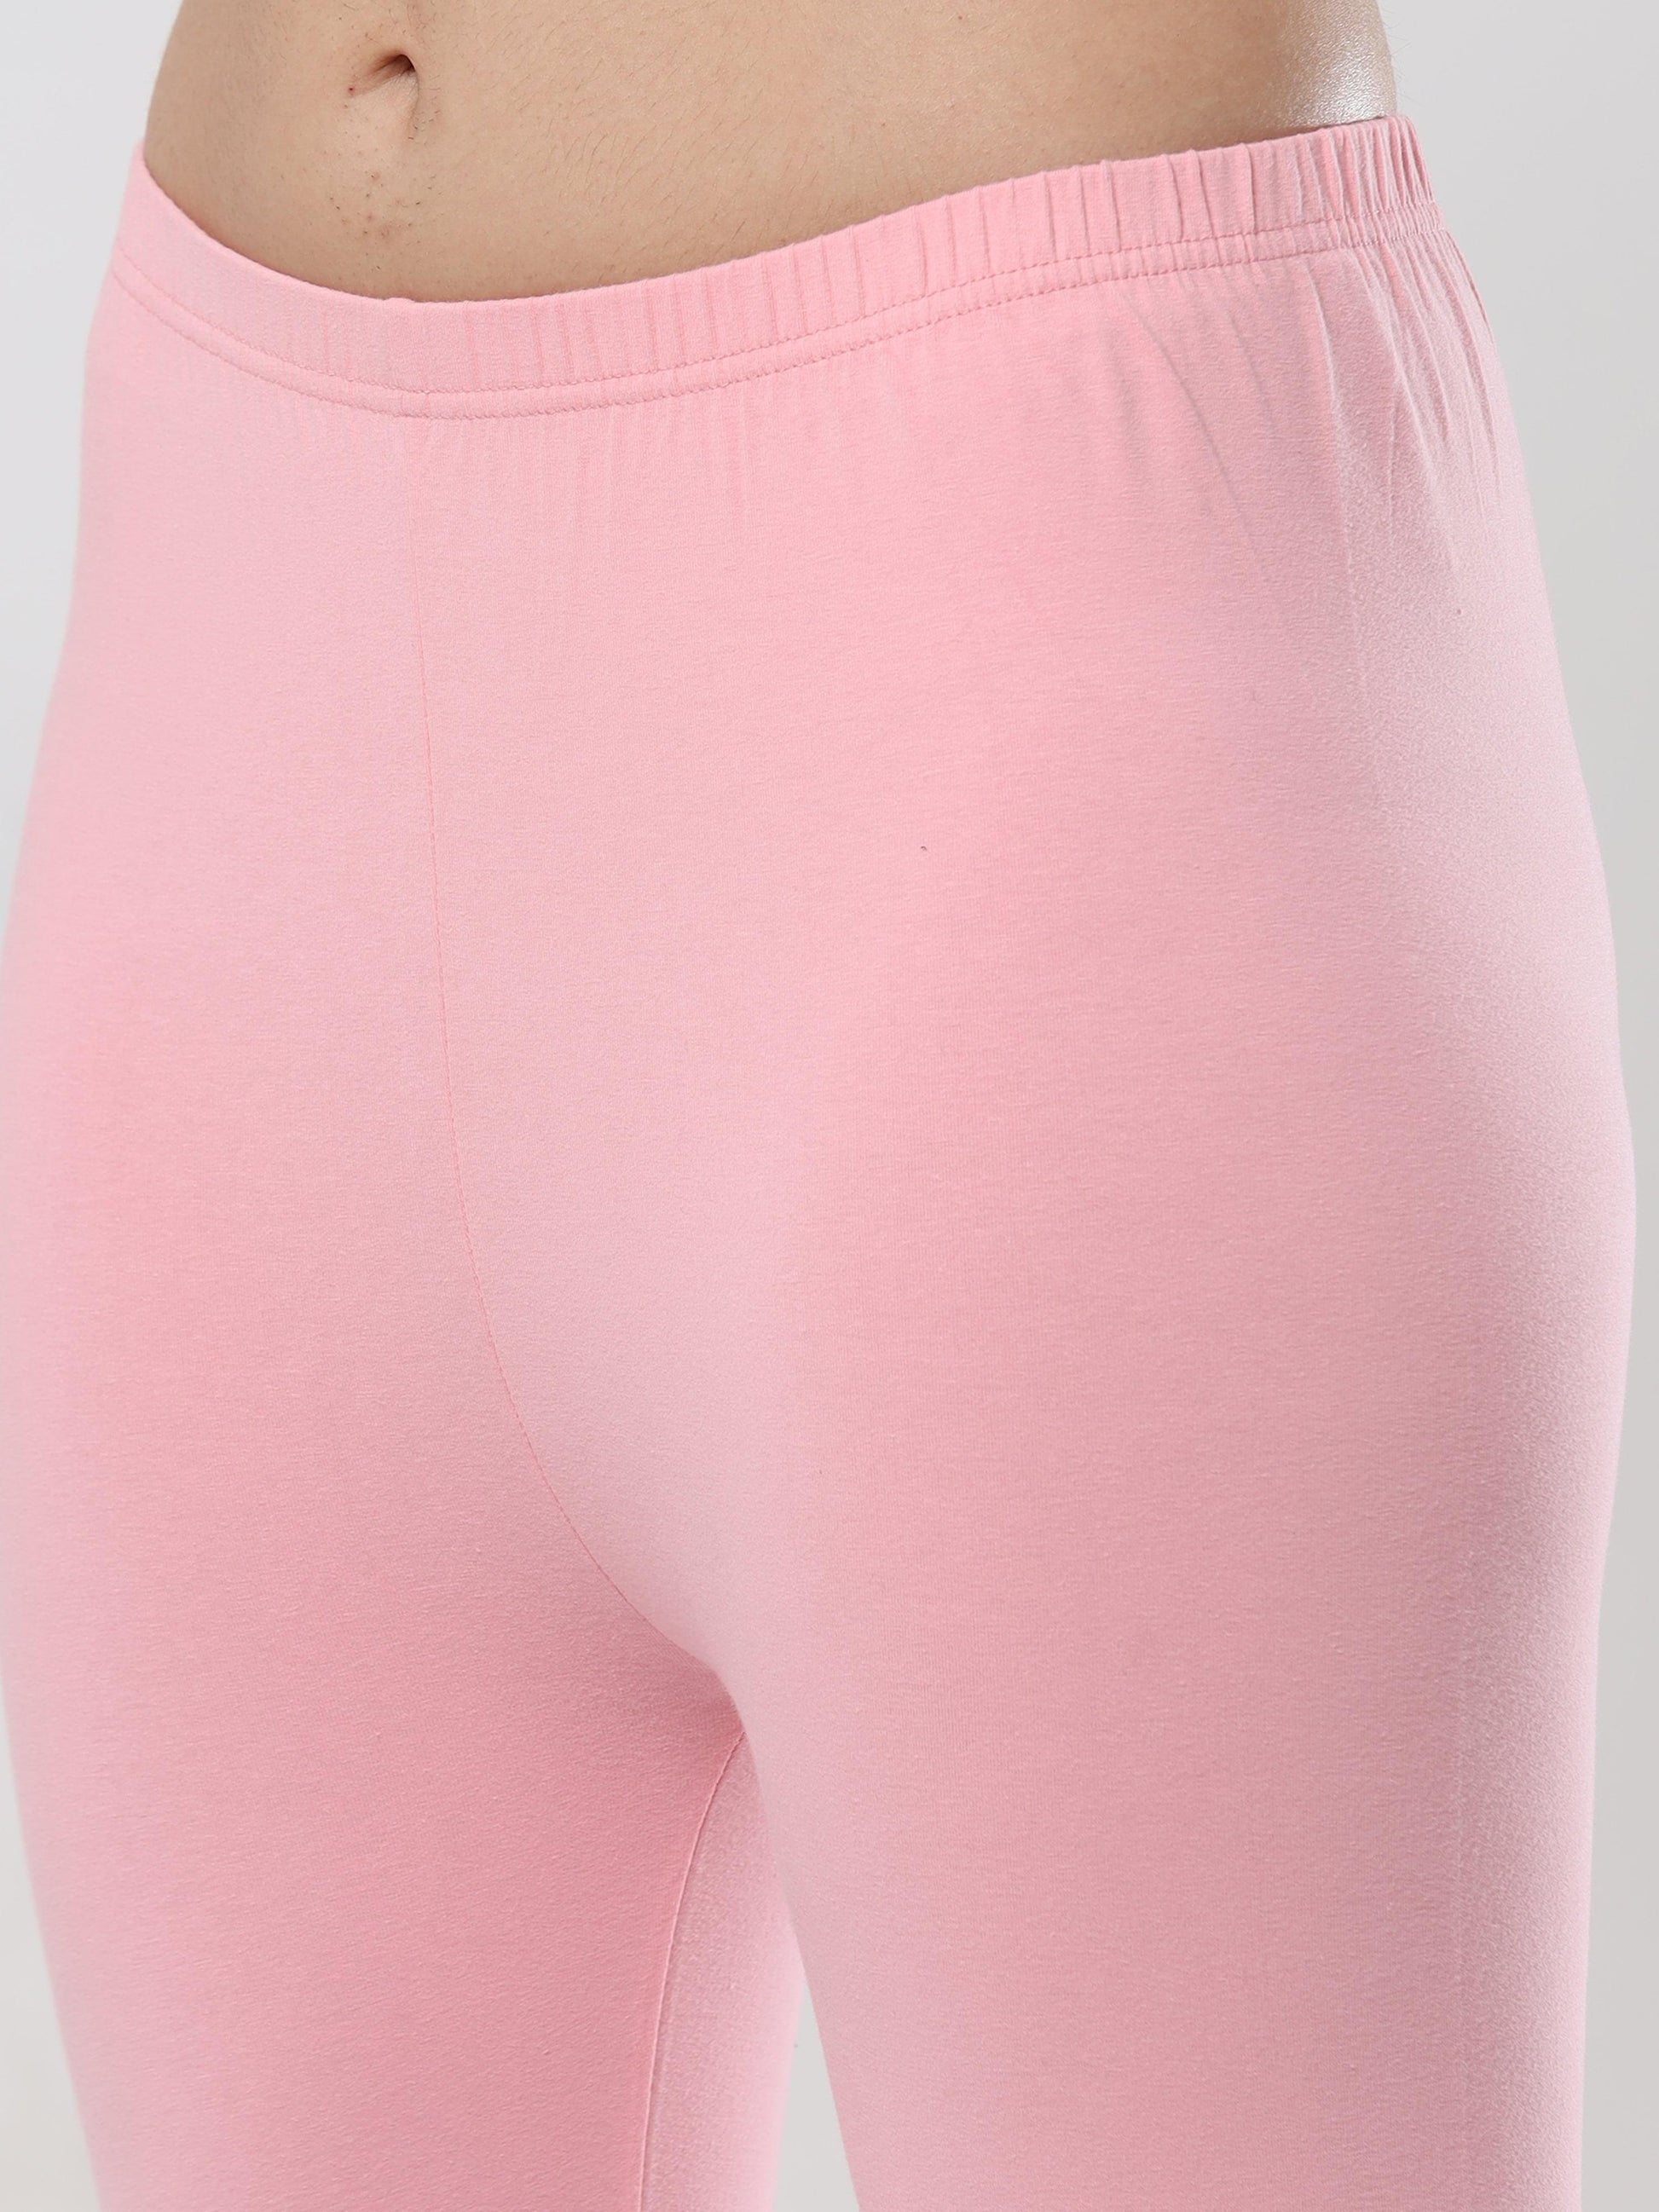 Baby Pink Women's Cotton Full Length Churidar Leggings Size :- XL,XXL